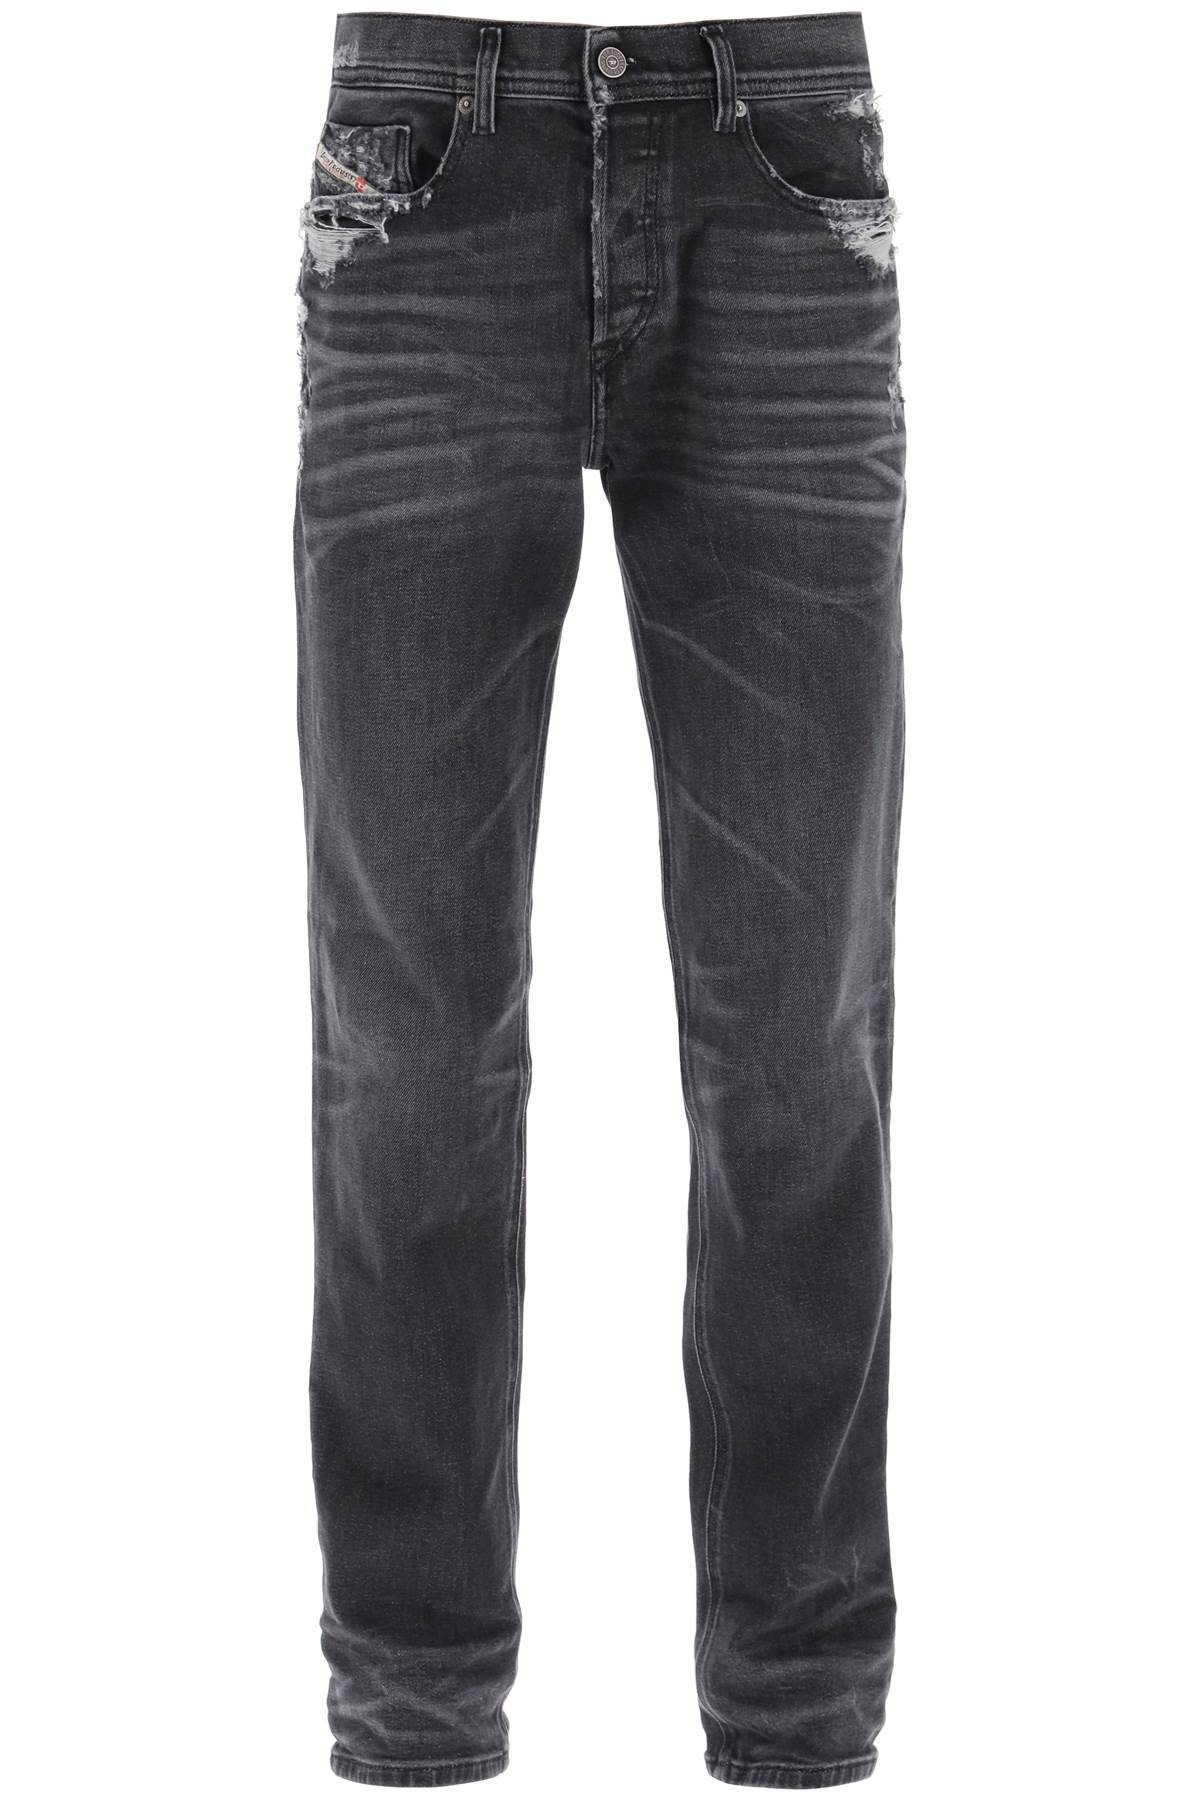 Diesel DIESEL 023 d-finitive regular fit jeans